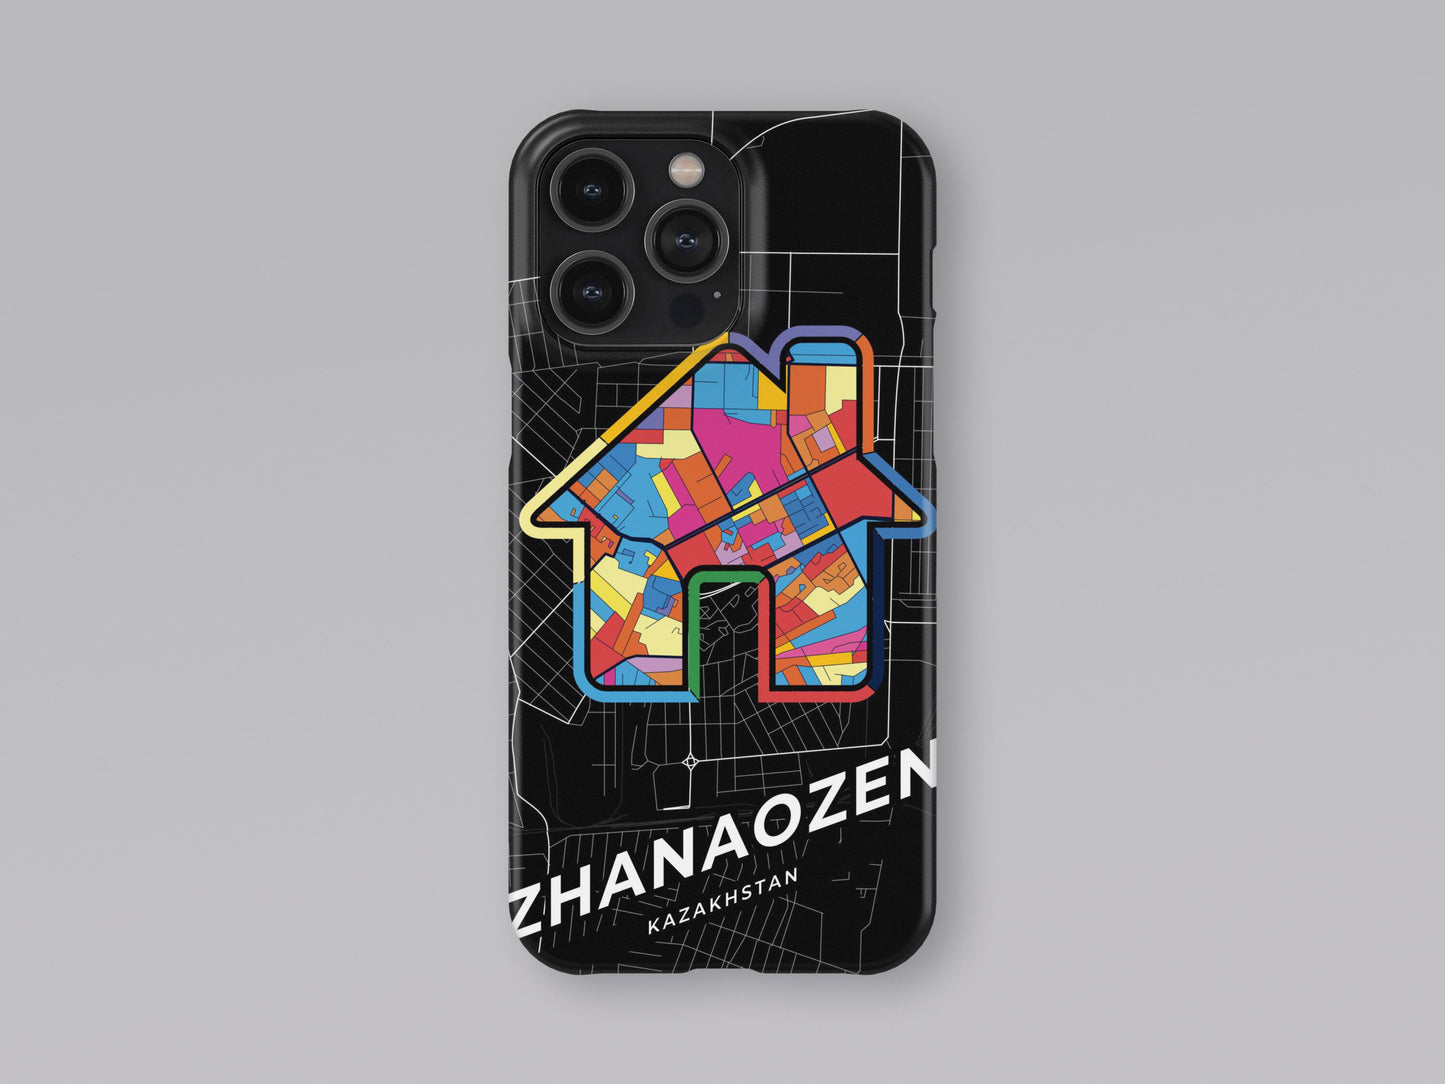 Zhanaozen Kazakhstan slim phone case with colorful icon 3